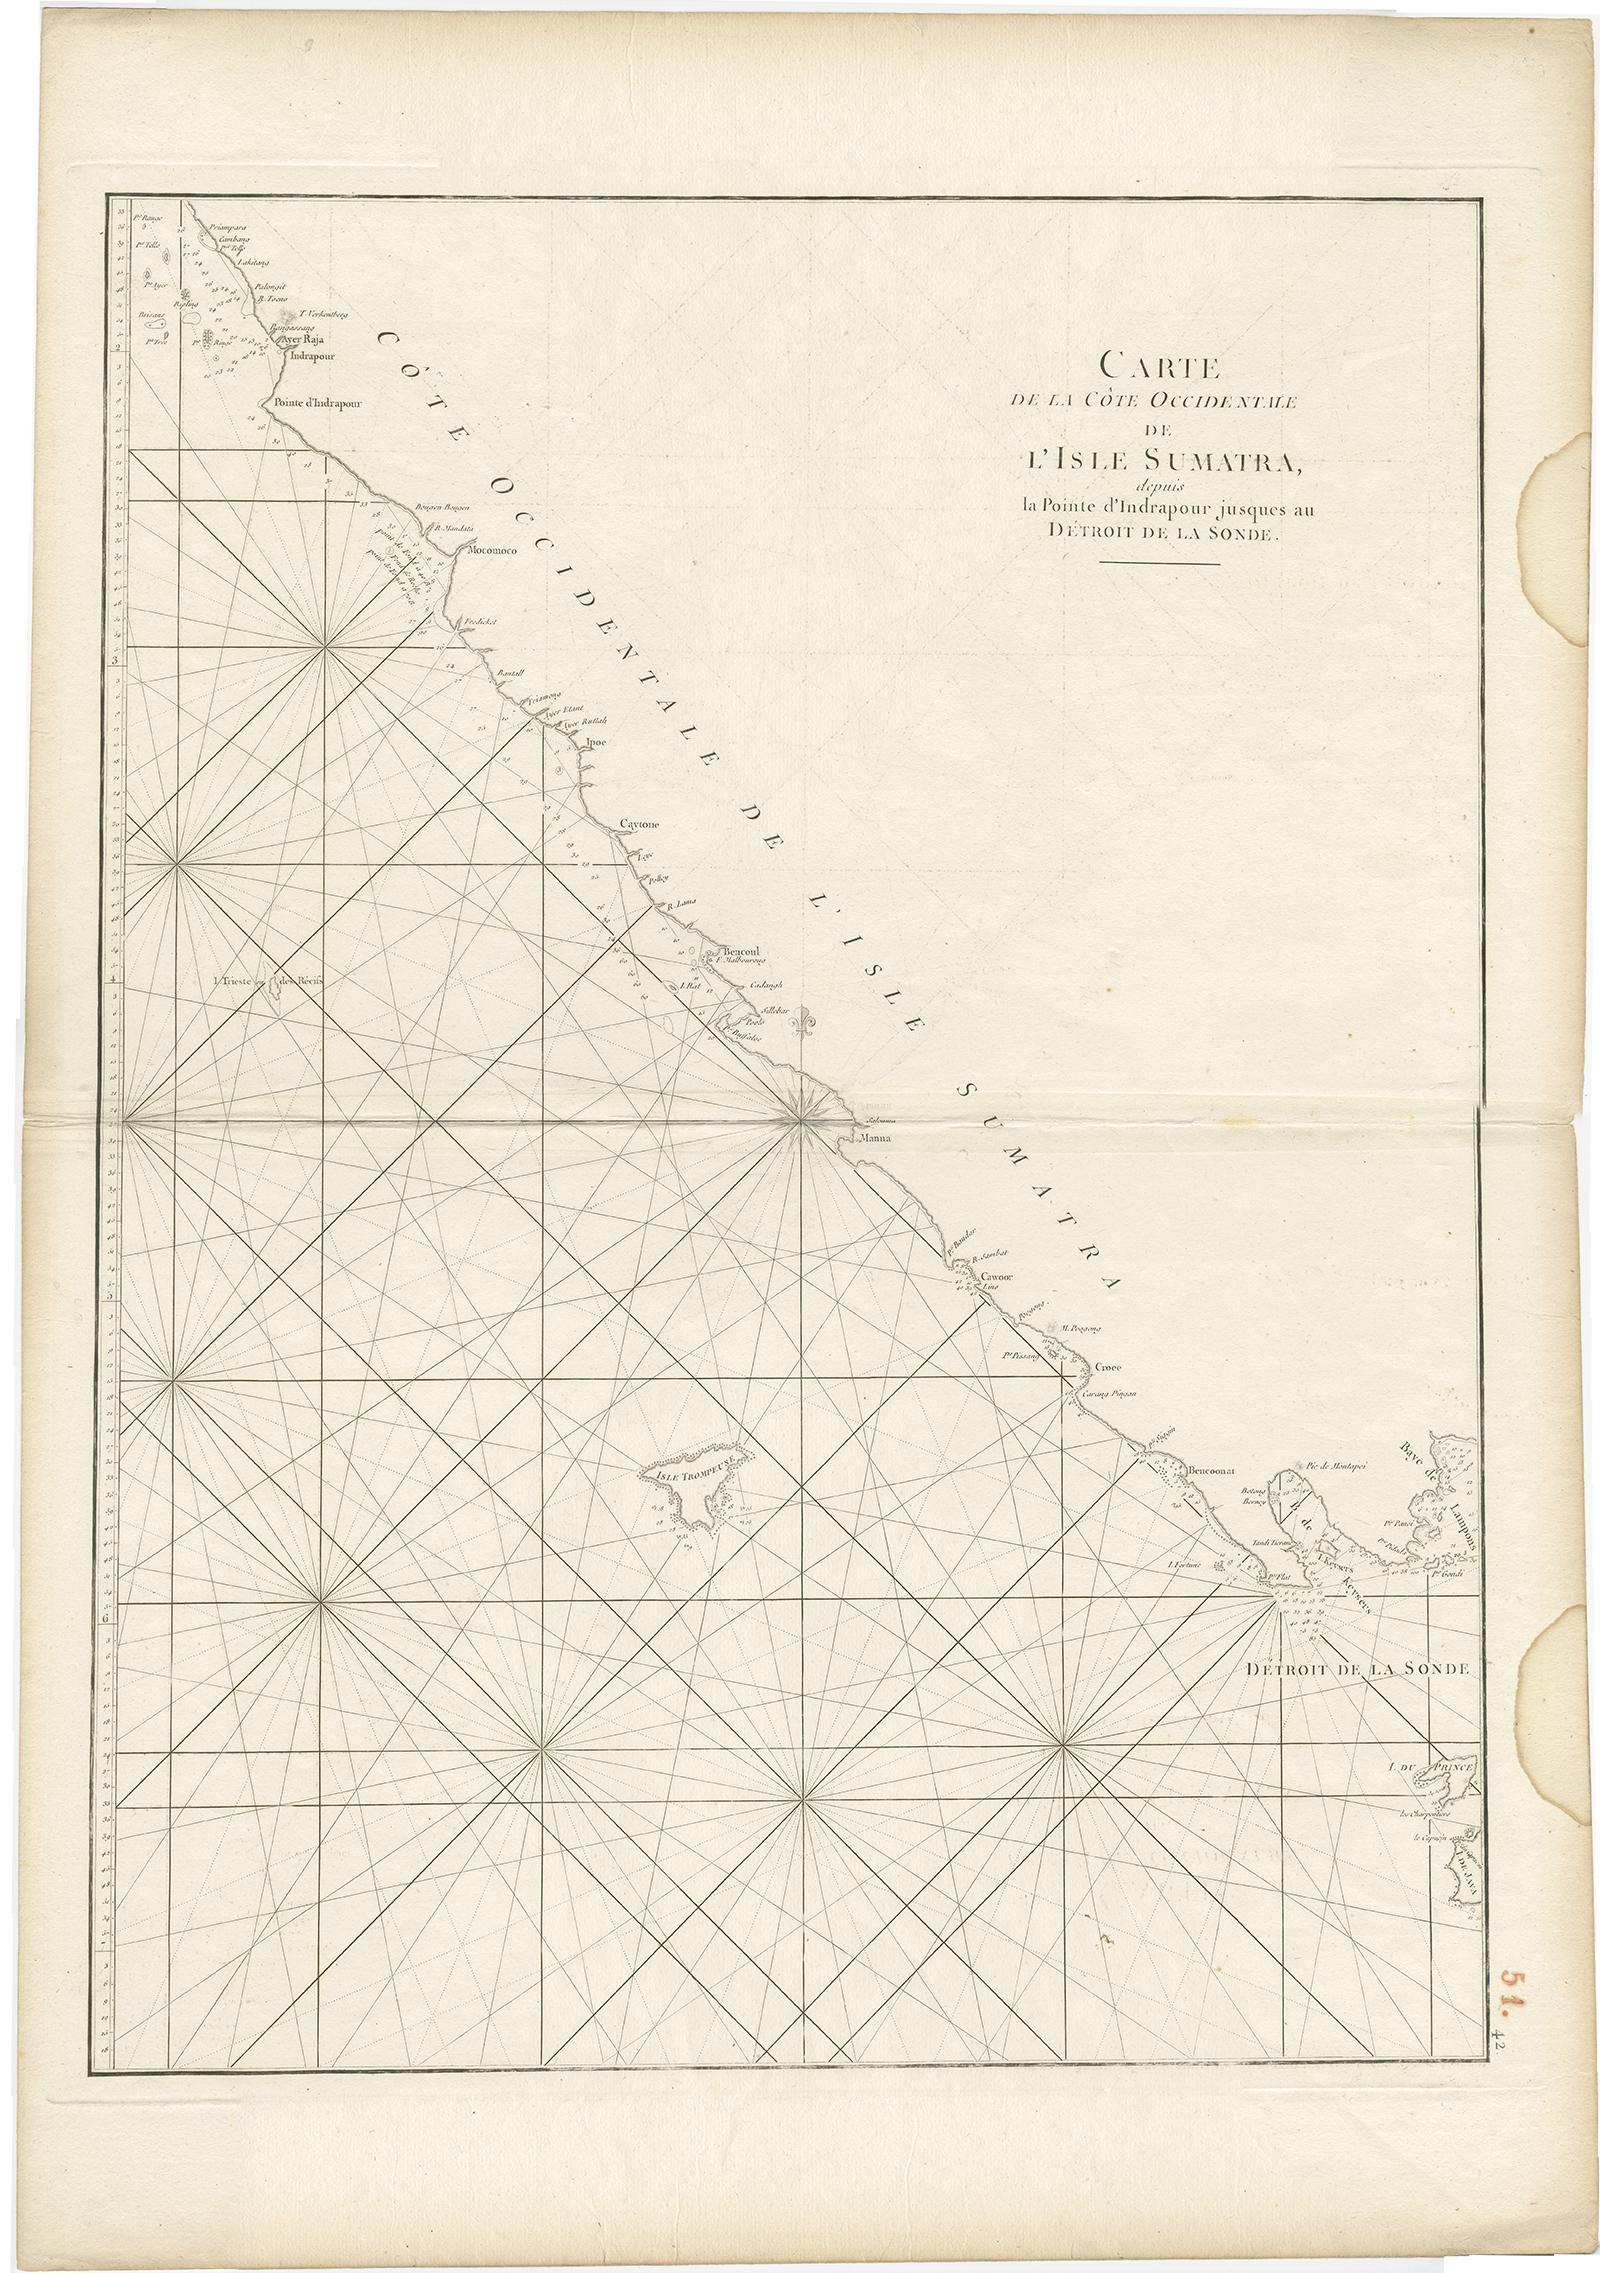 Antique map titled 'Carte de la Côte Occidentale de l'Isle Sumatra'. Sea chart of the part of the south-western coast of Sumatra with the Nassau (Nias) and Fortune isles.

Artists and Engravers: D' Après de Mannevillette (1707-1780) was a famous